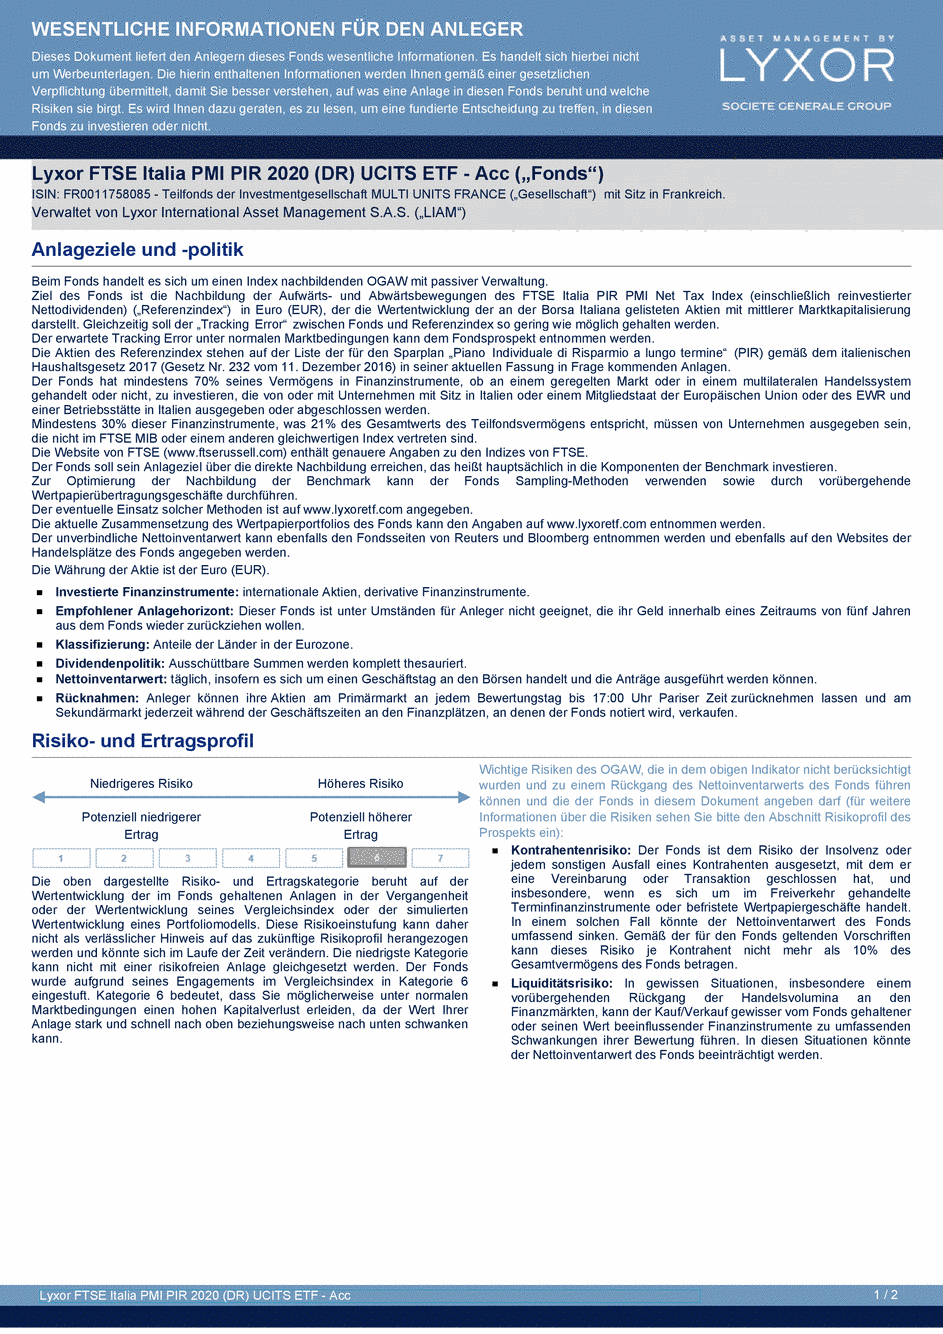 DICI Lyxor FTSE Italia PMI PIR 2020 (DR) UCITS ETF - Acc - 30/03/2020 - Allemand